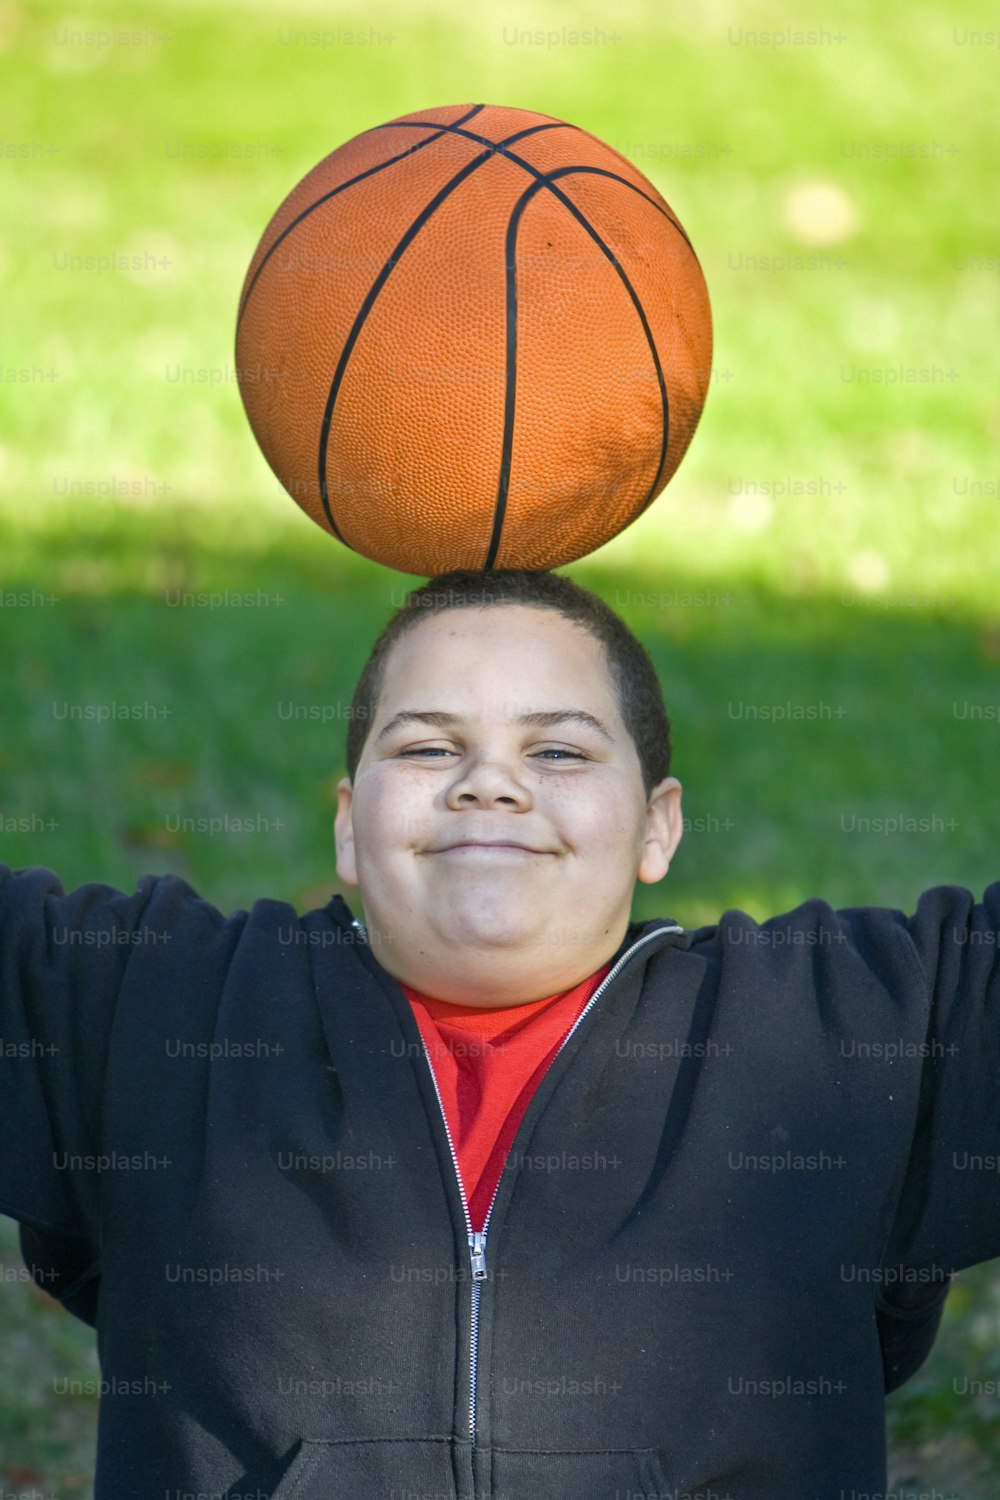 Ragazzo con pallacanestro in equilibrio sulla testa